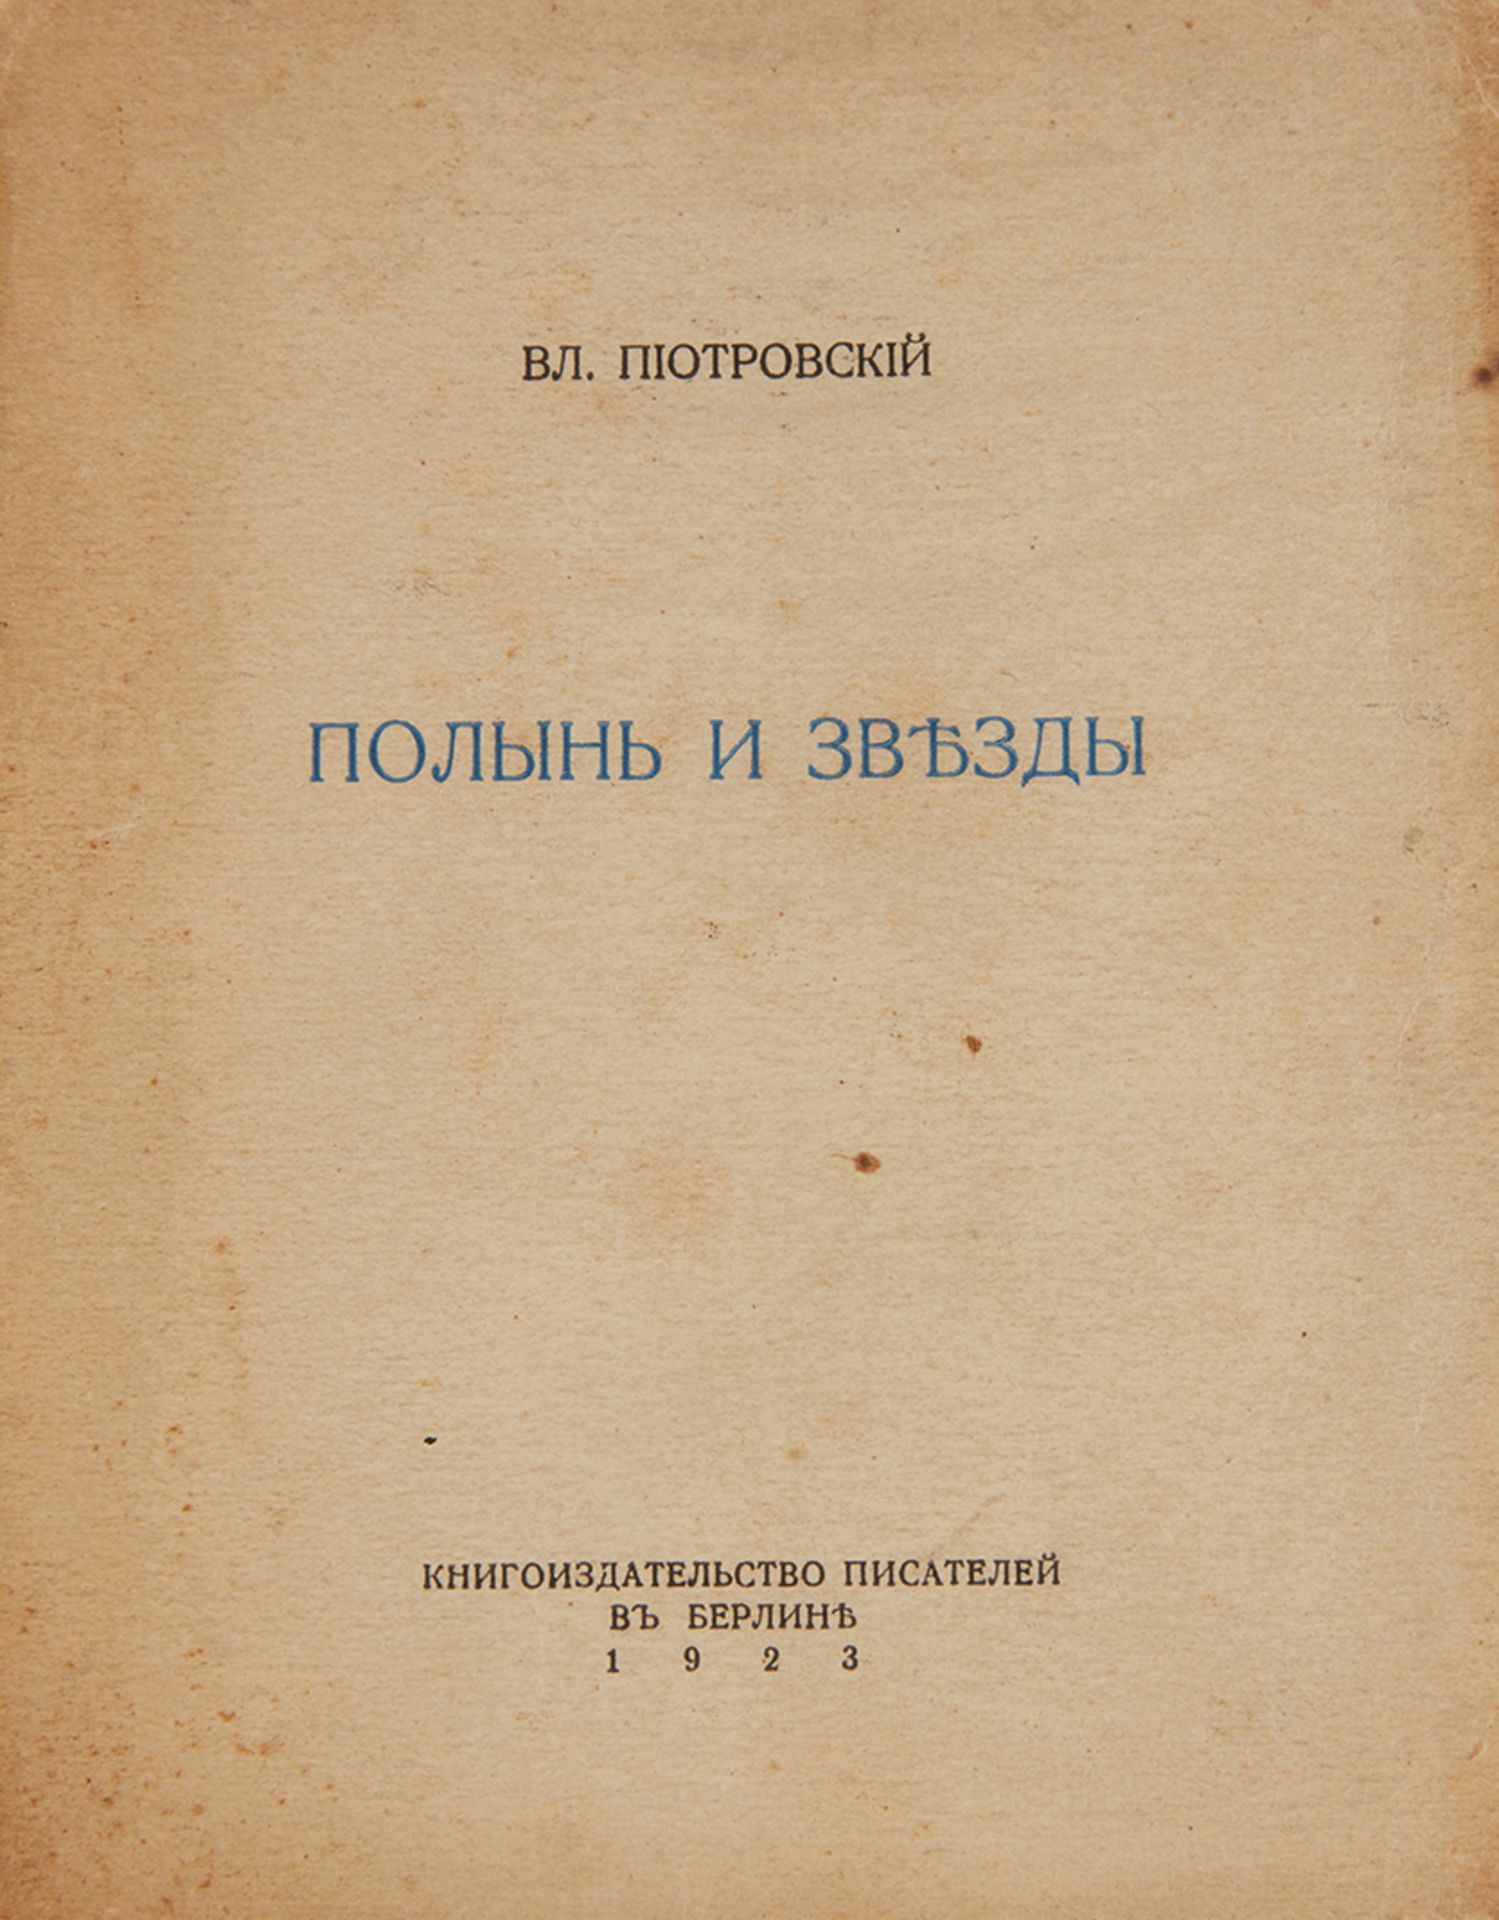 PIOTROVSKY (CORVIN-PIOTROVSKY), Vladimir Lvovich (1901-1966) - Sagebrush and stars: [...]